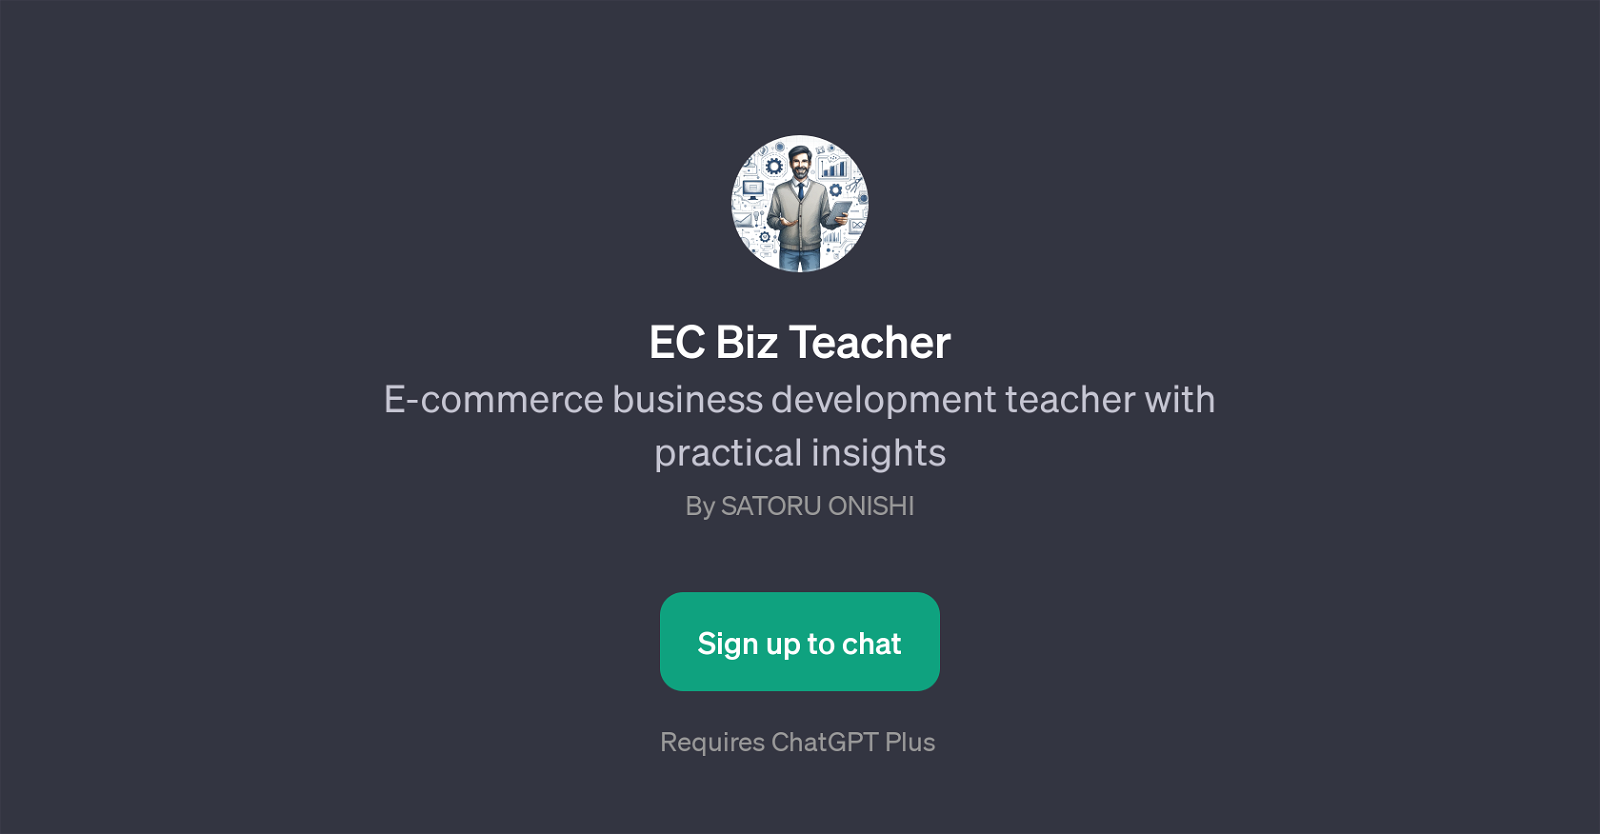 EC Biz Teacher website